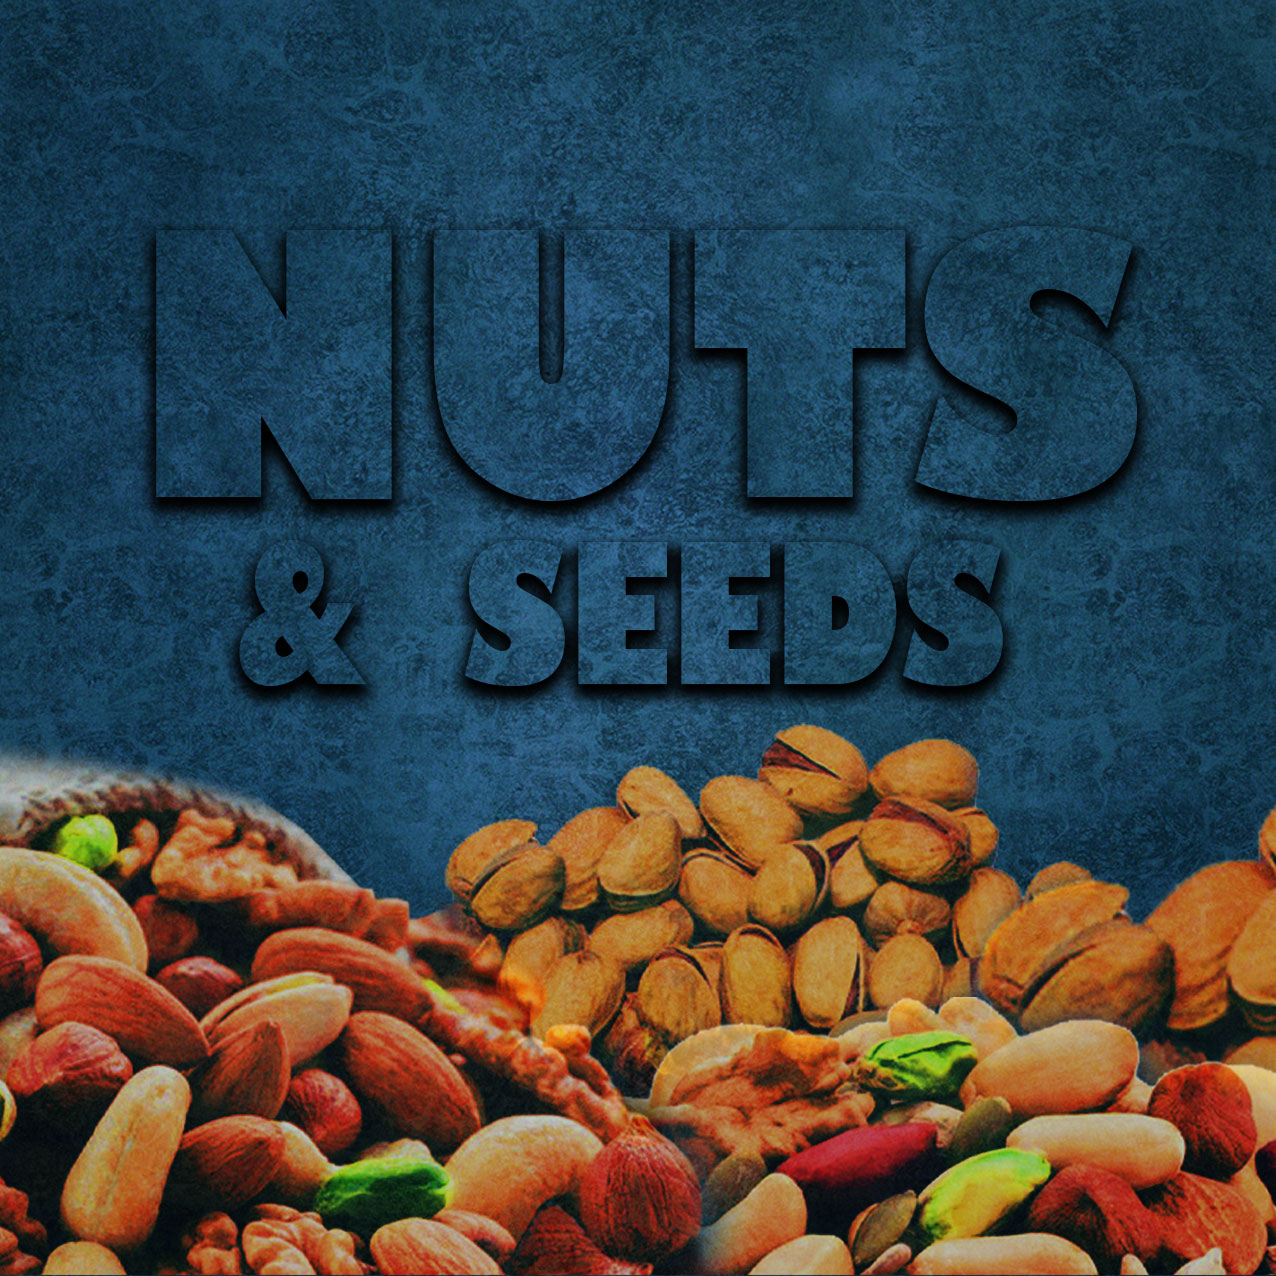 02. Nuts & Seeds